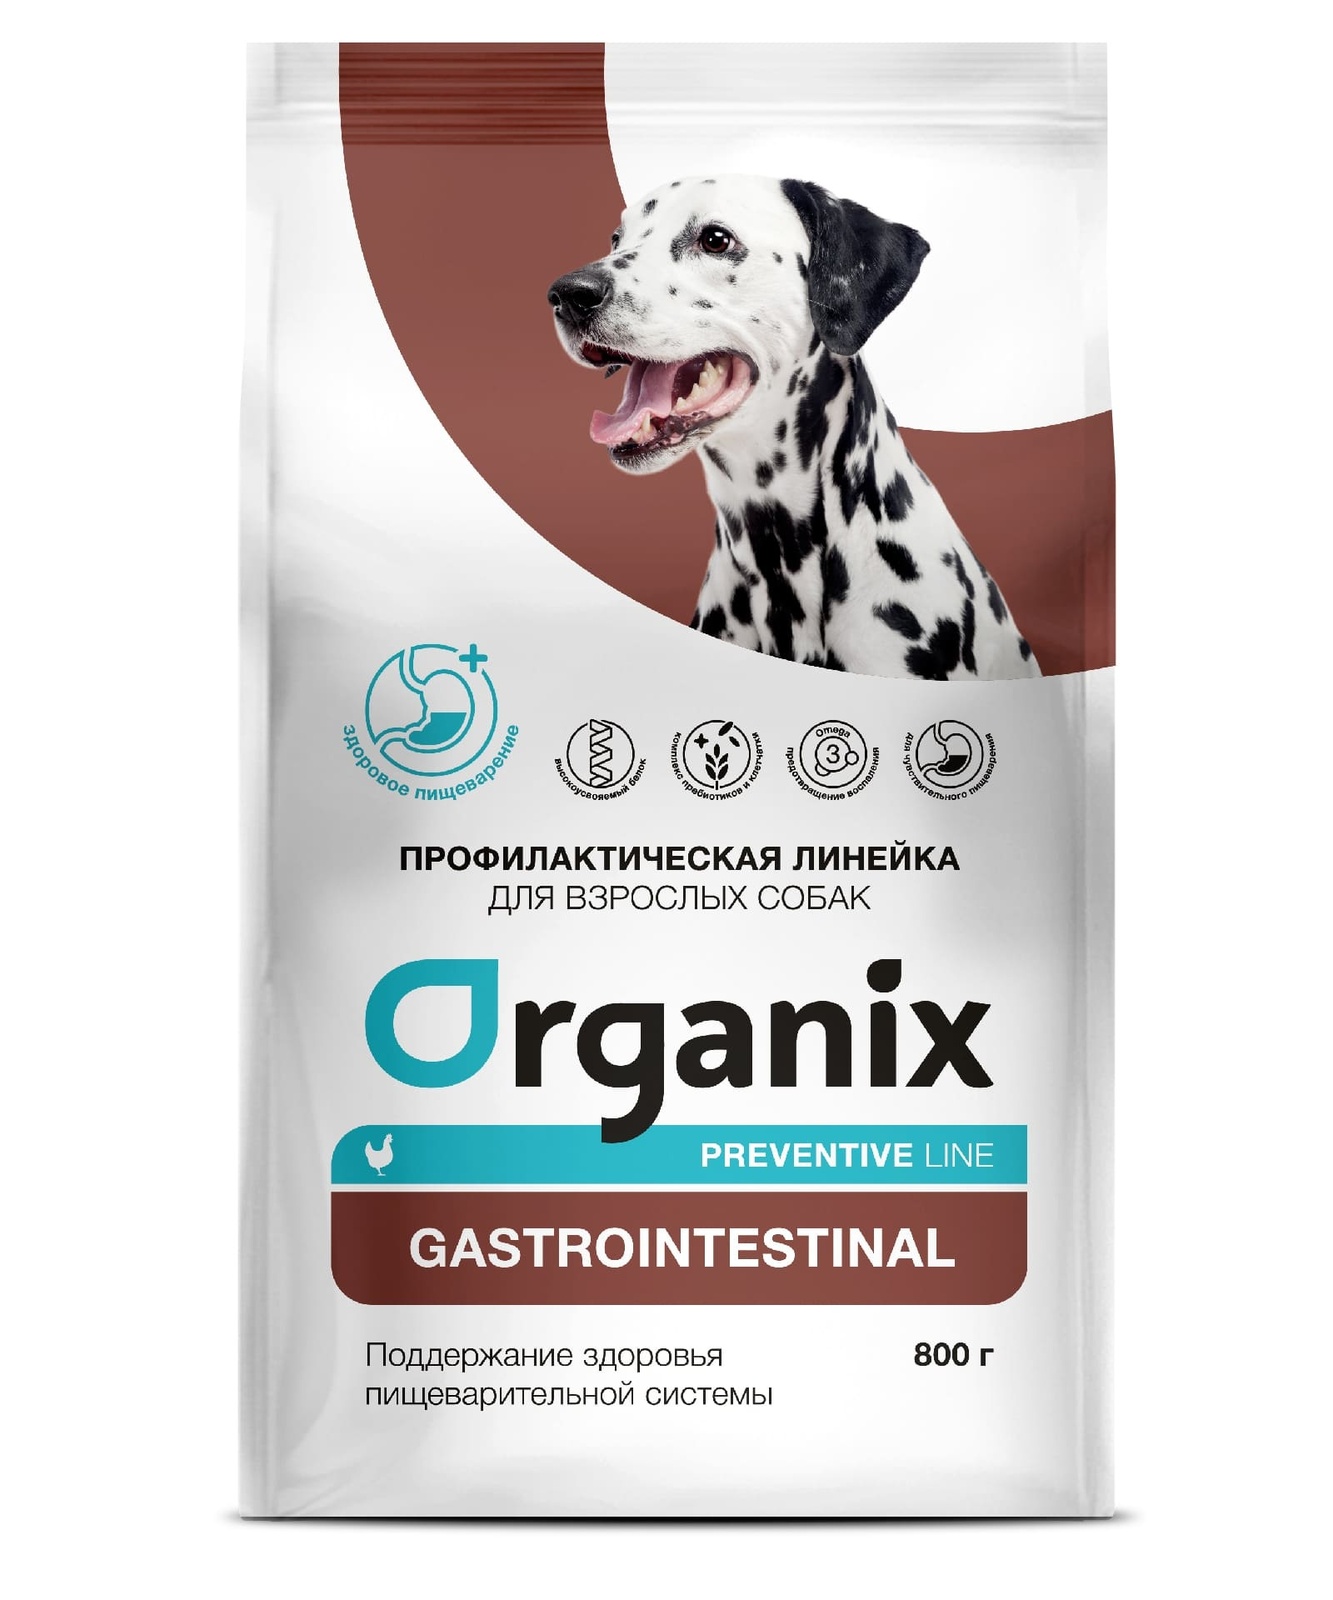 Organix Preventive Line gastrointestinal сухой корм для собак 